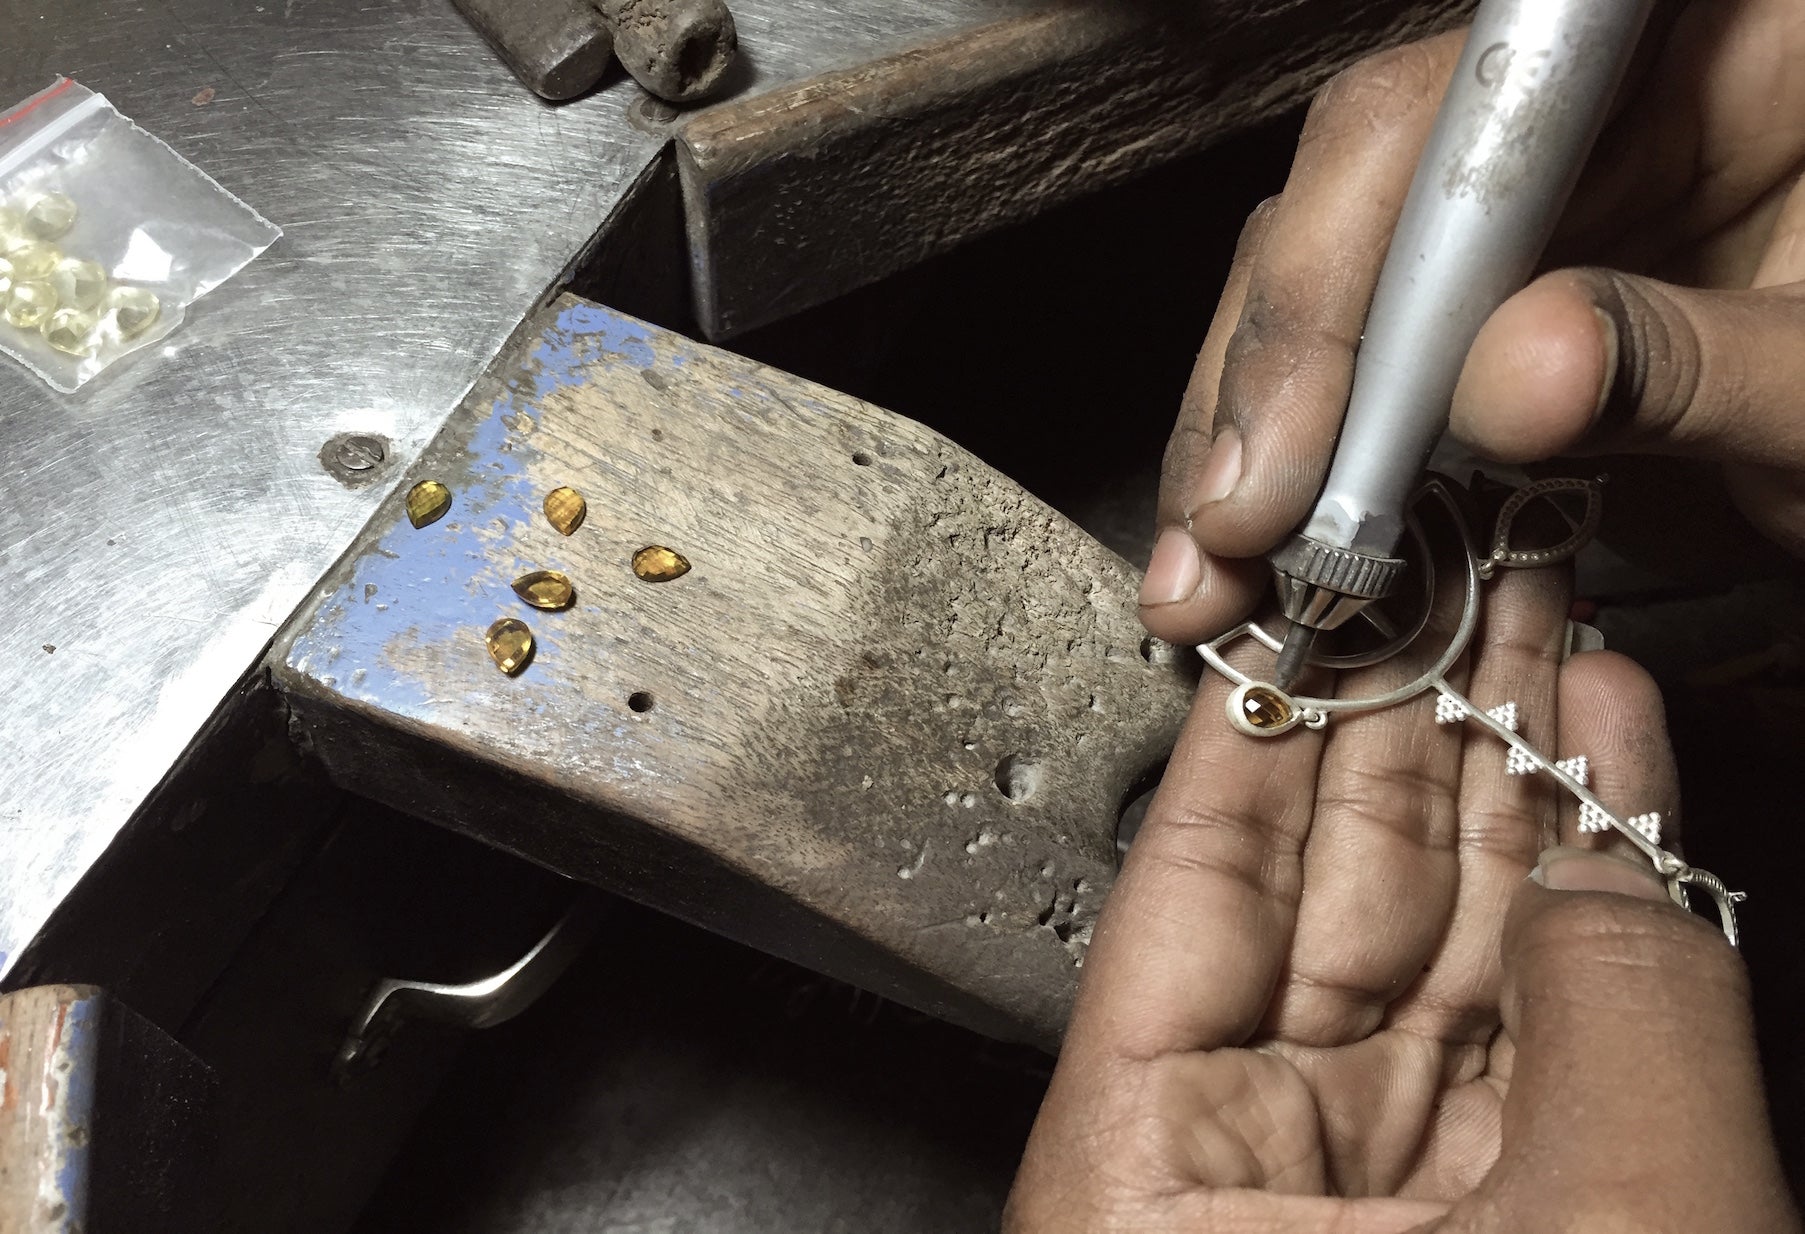 Bidri jewelry in making. Handmade sterling silver jewelry by Lai